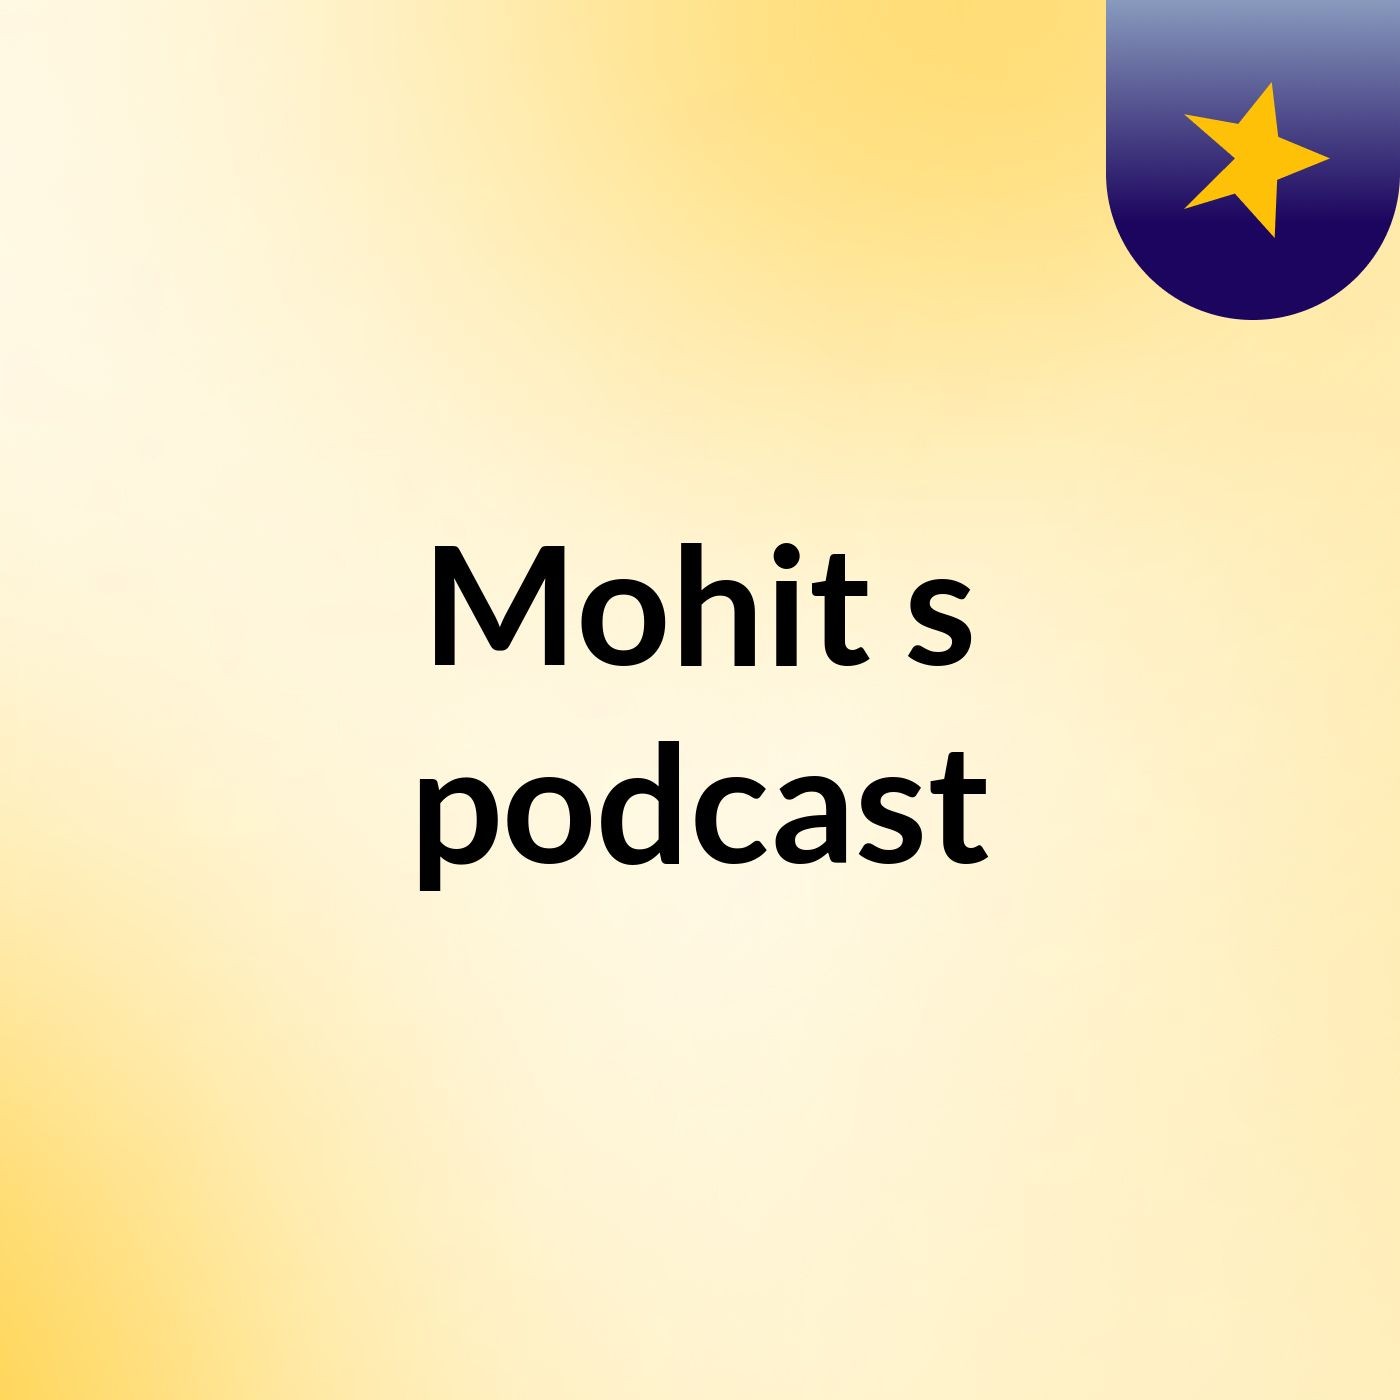 Mohit's podcast